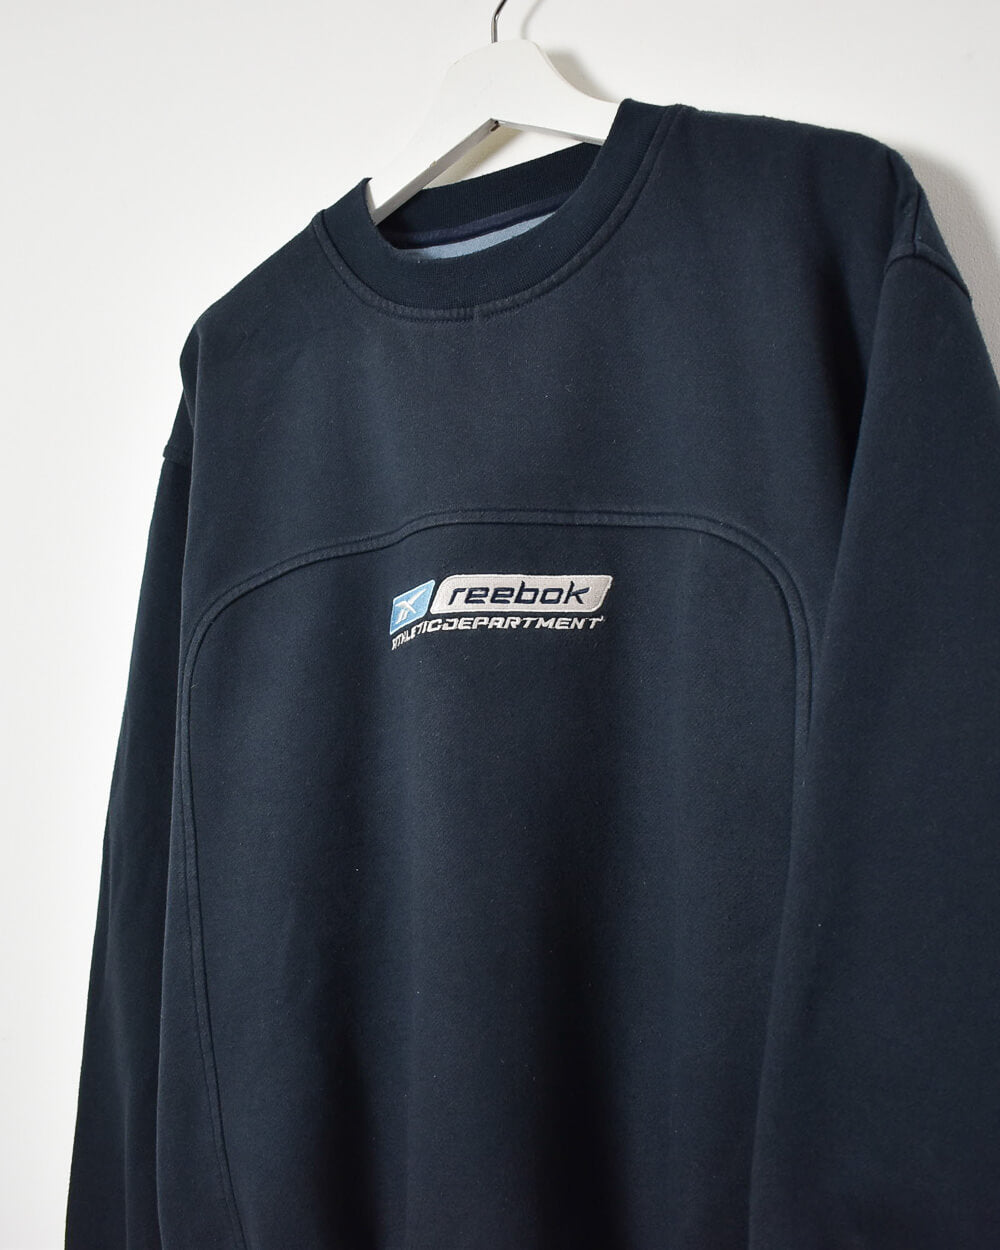 Navy Reebok Athletic Department Sweatshirt - Medium